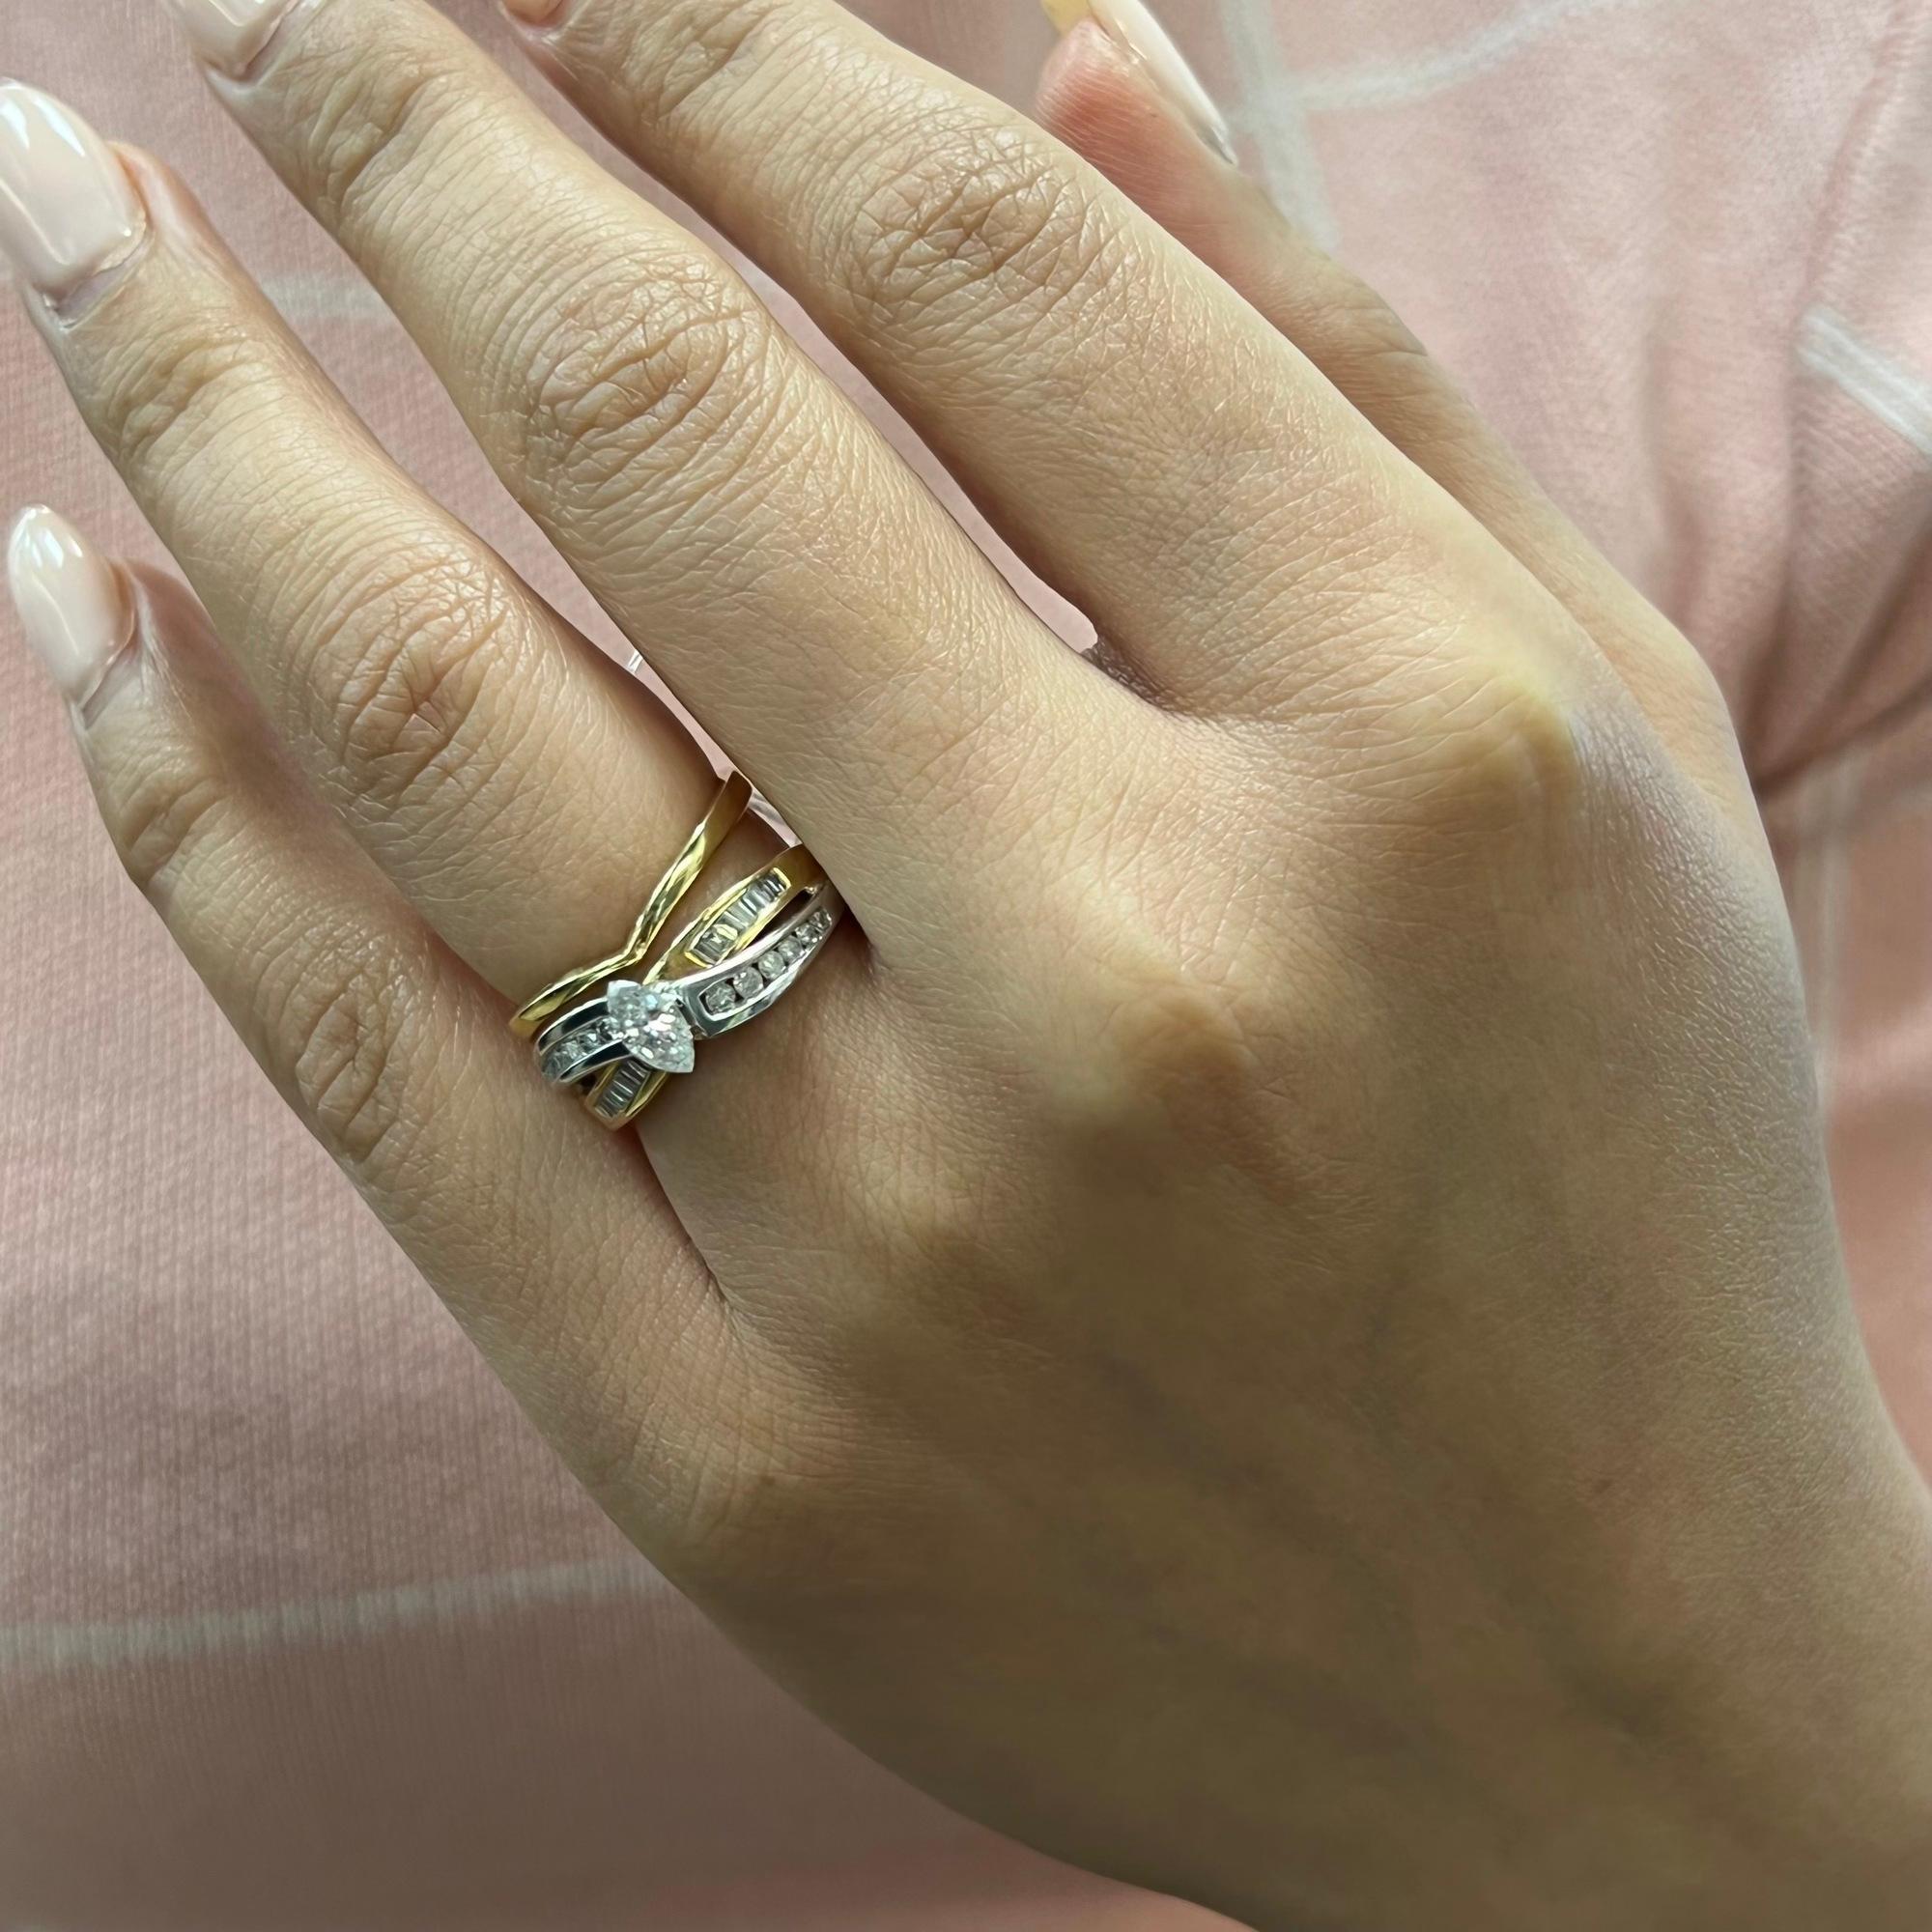 Rachel Koen Marquise Cut Diamond Engagement Ring Set 14K Yellow Gold 1.05Cttw For Sale 4